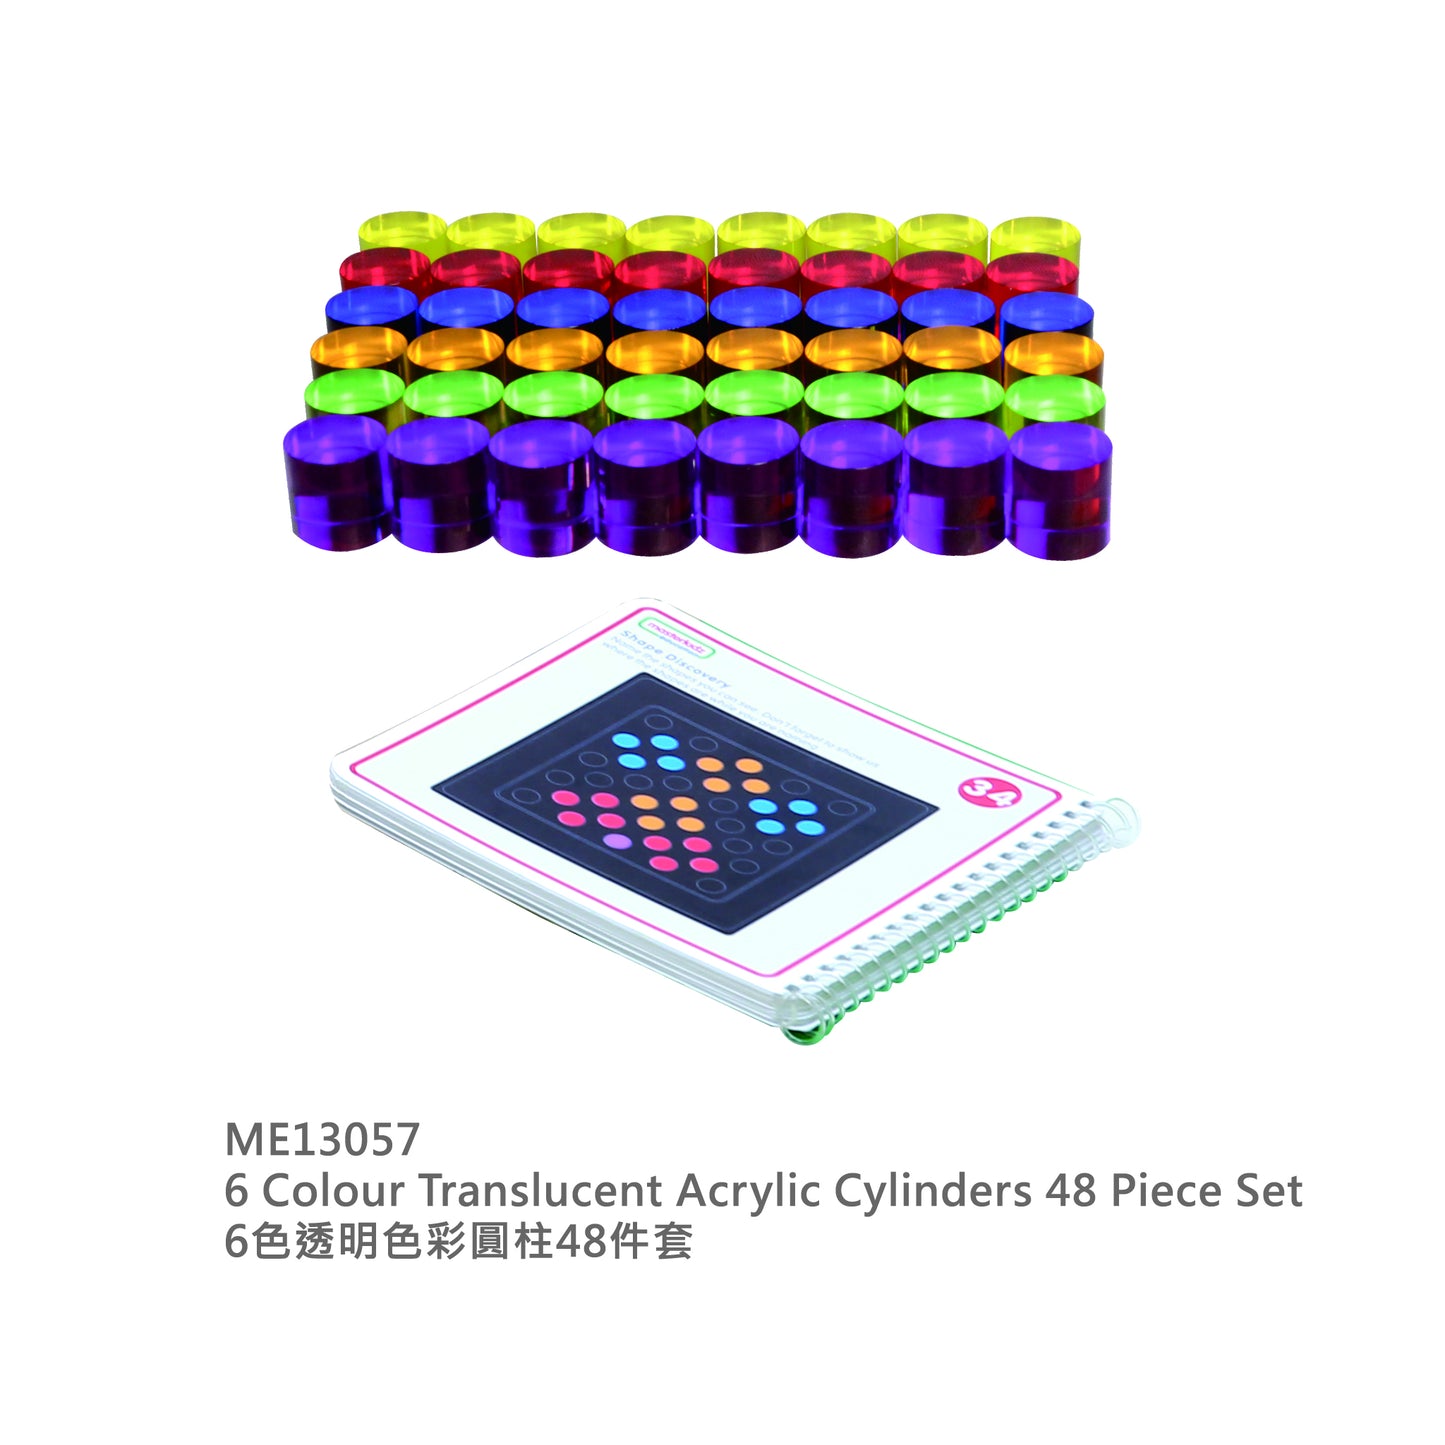 Masterkidz Translucent Acrylic Balls and Cylinders Sensory Play Set 高透明色彩 壓克力球和圓柱體 感官體驗套裝